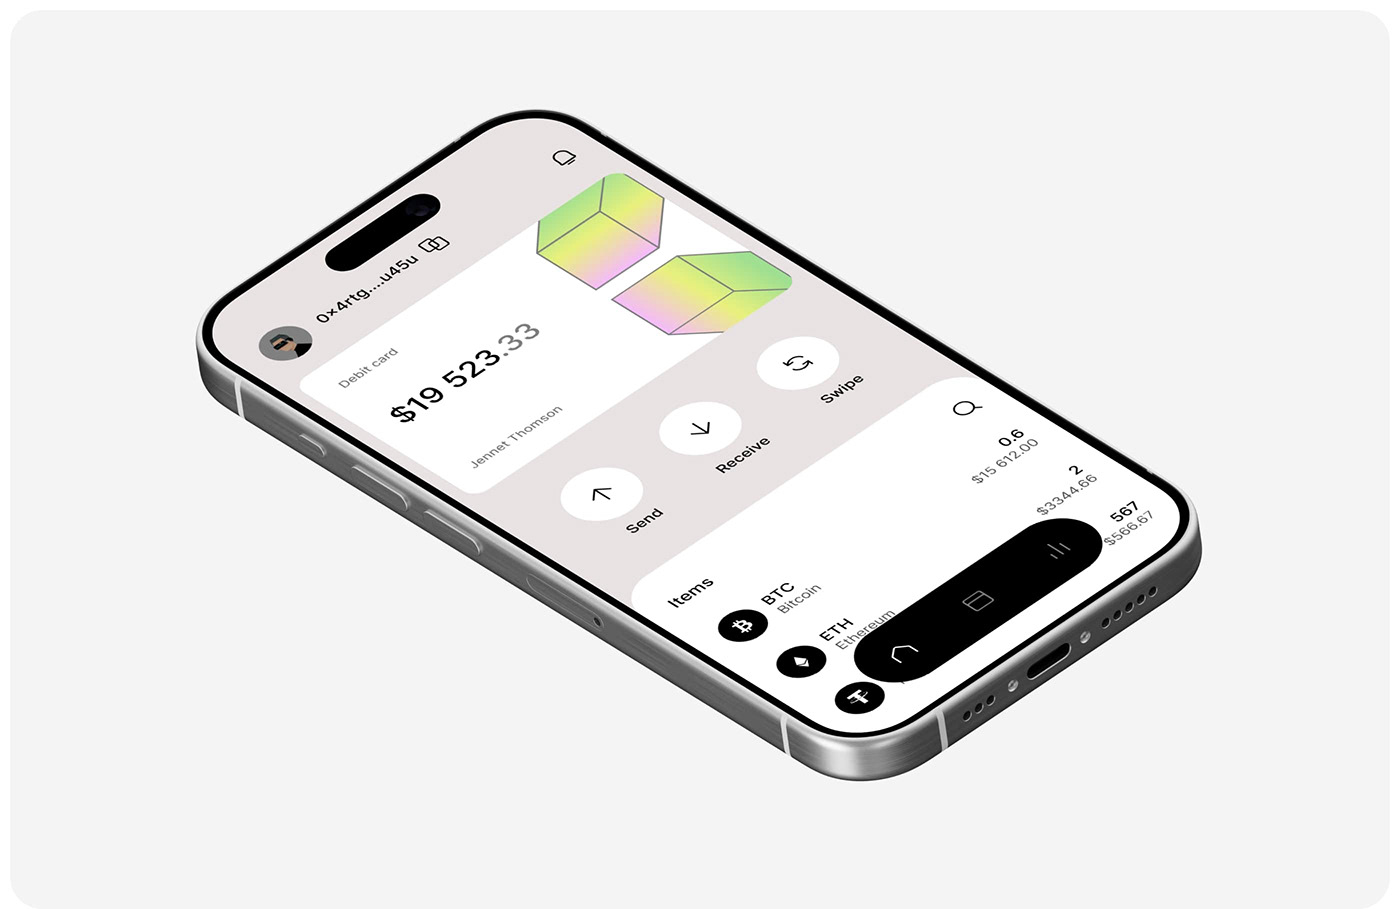 crypto WALLET blockchain branding  styleguide uiux Website mobile design app